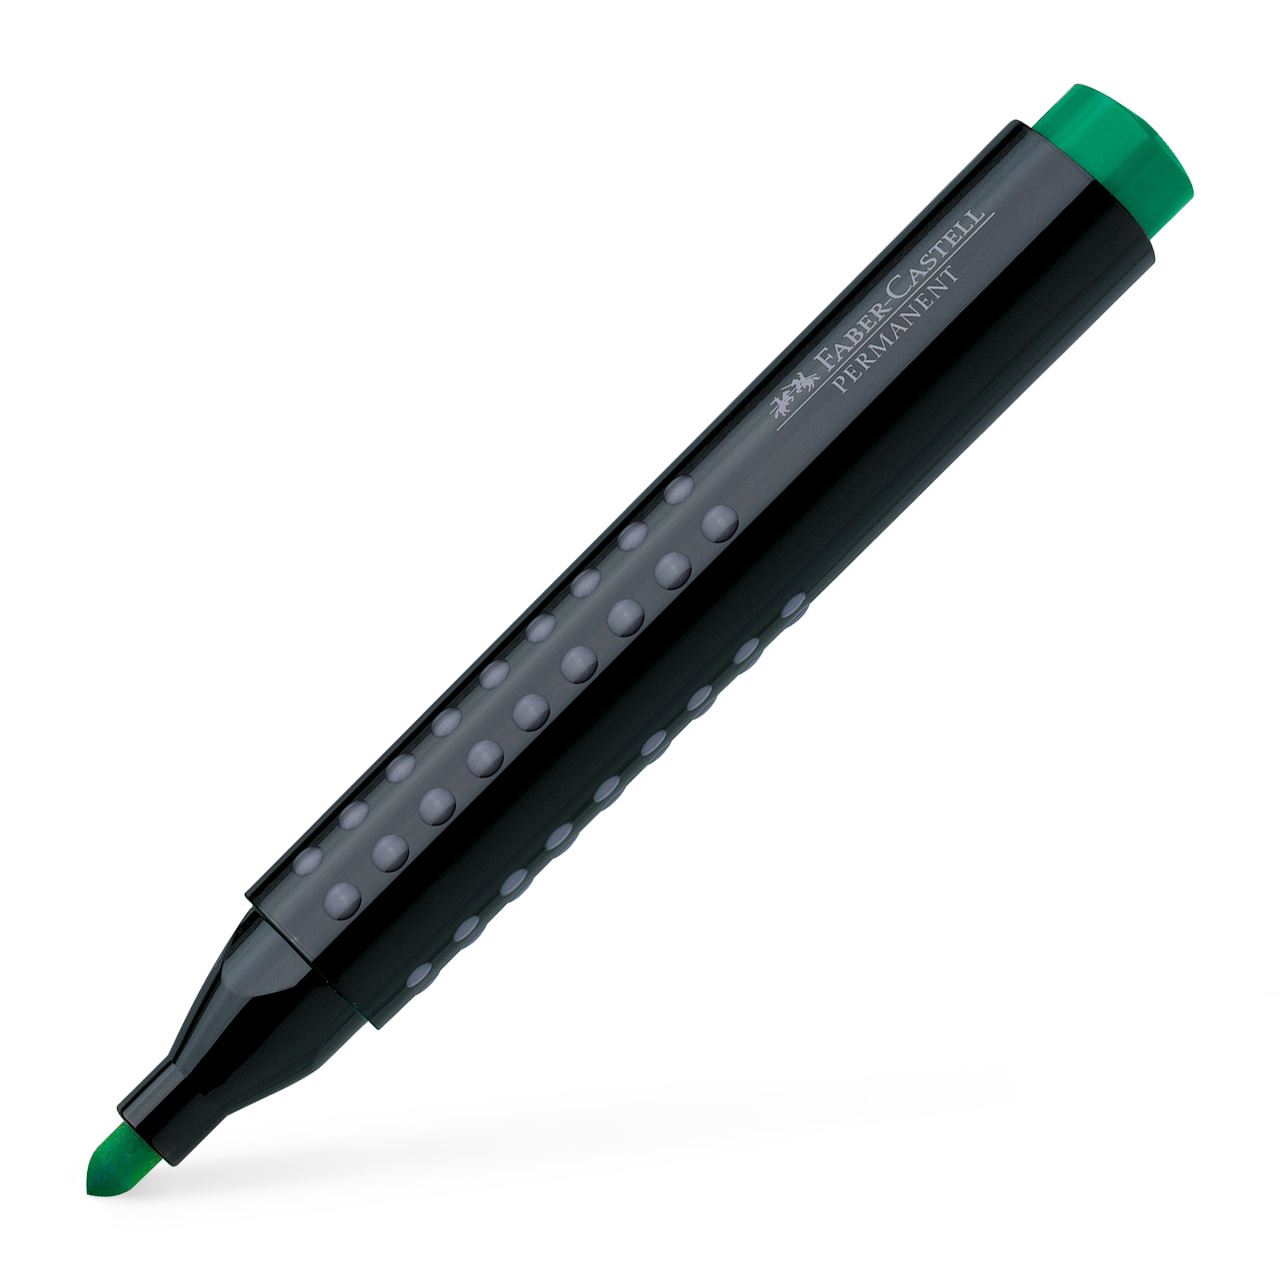 Faber-Castell - Grip Marker Permanent, round tip, green